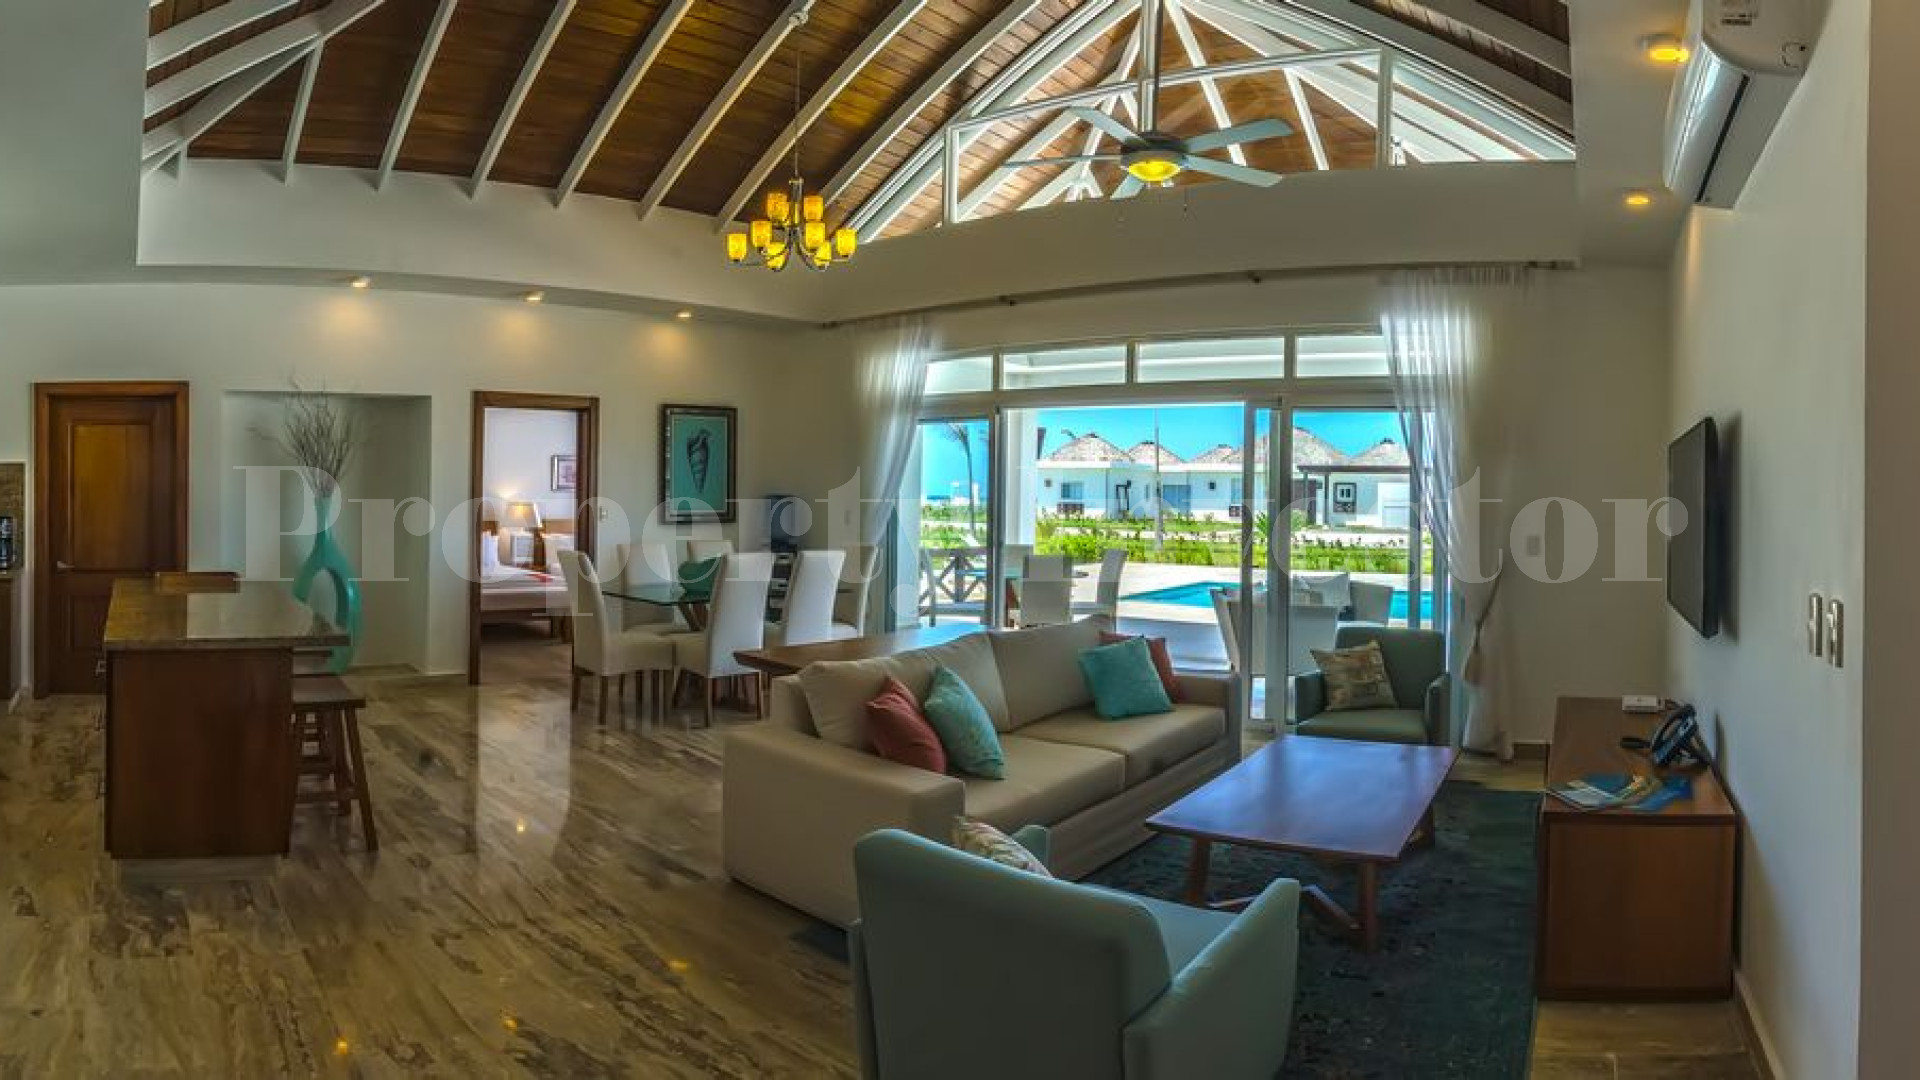 2 Bedroom Oceanview Villa in the Dominican Republic with 30 Year Financing (Villa 24)